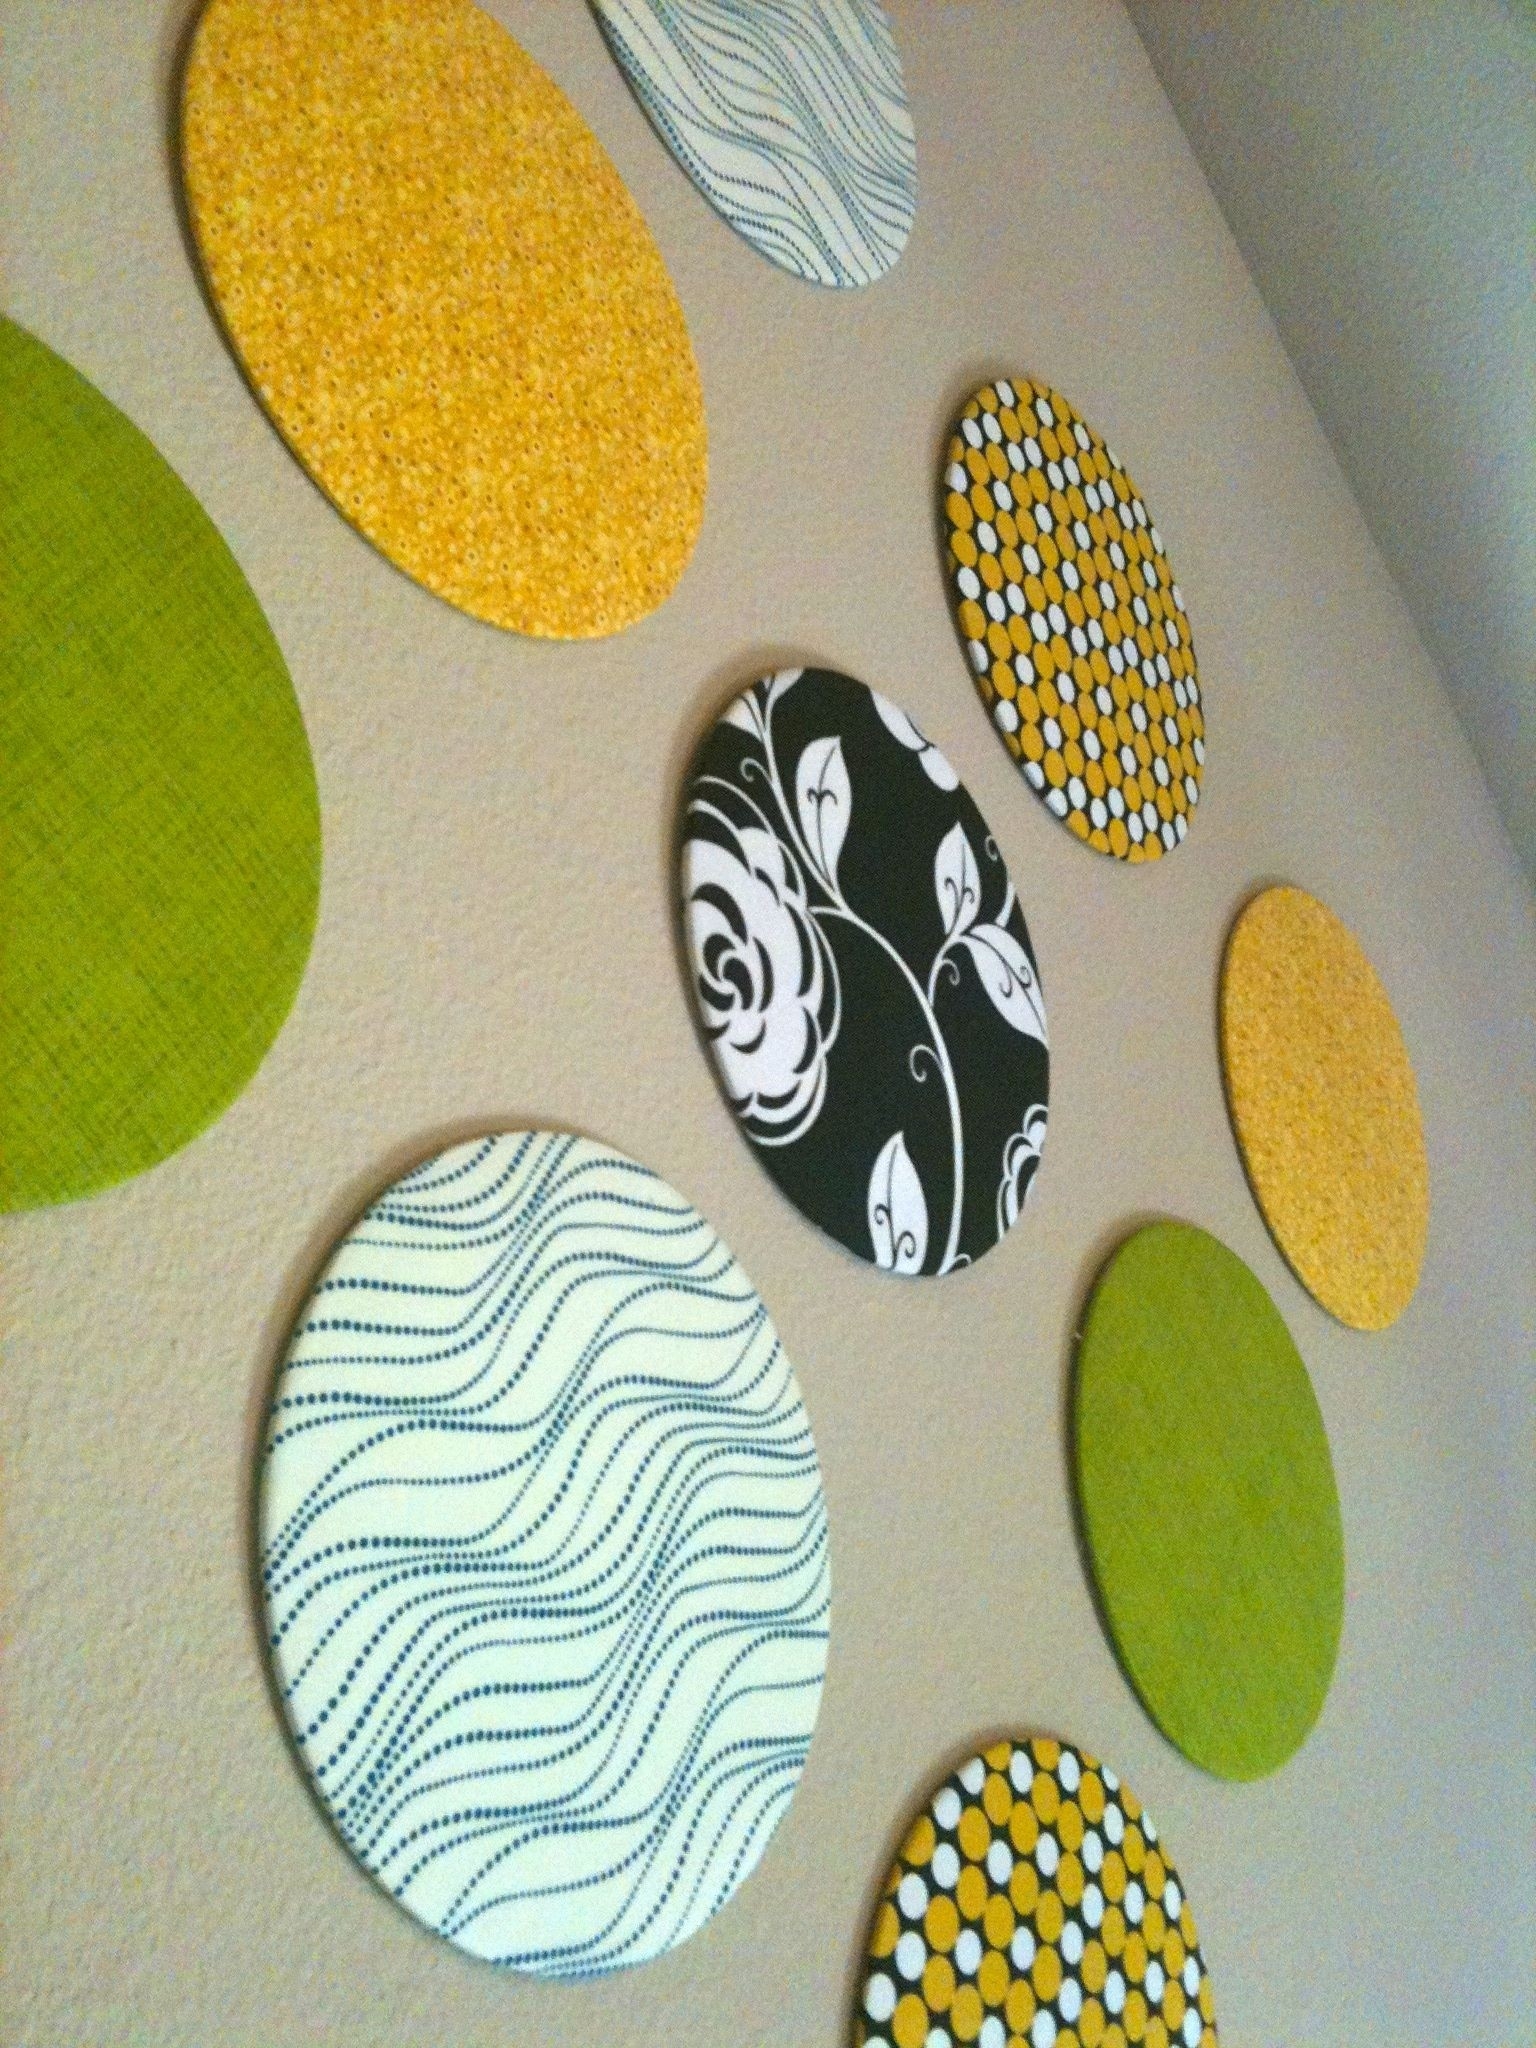 Decorate Plates with These Unique Ideas! - Mod Podge Rocks